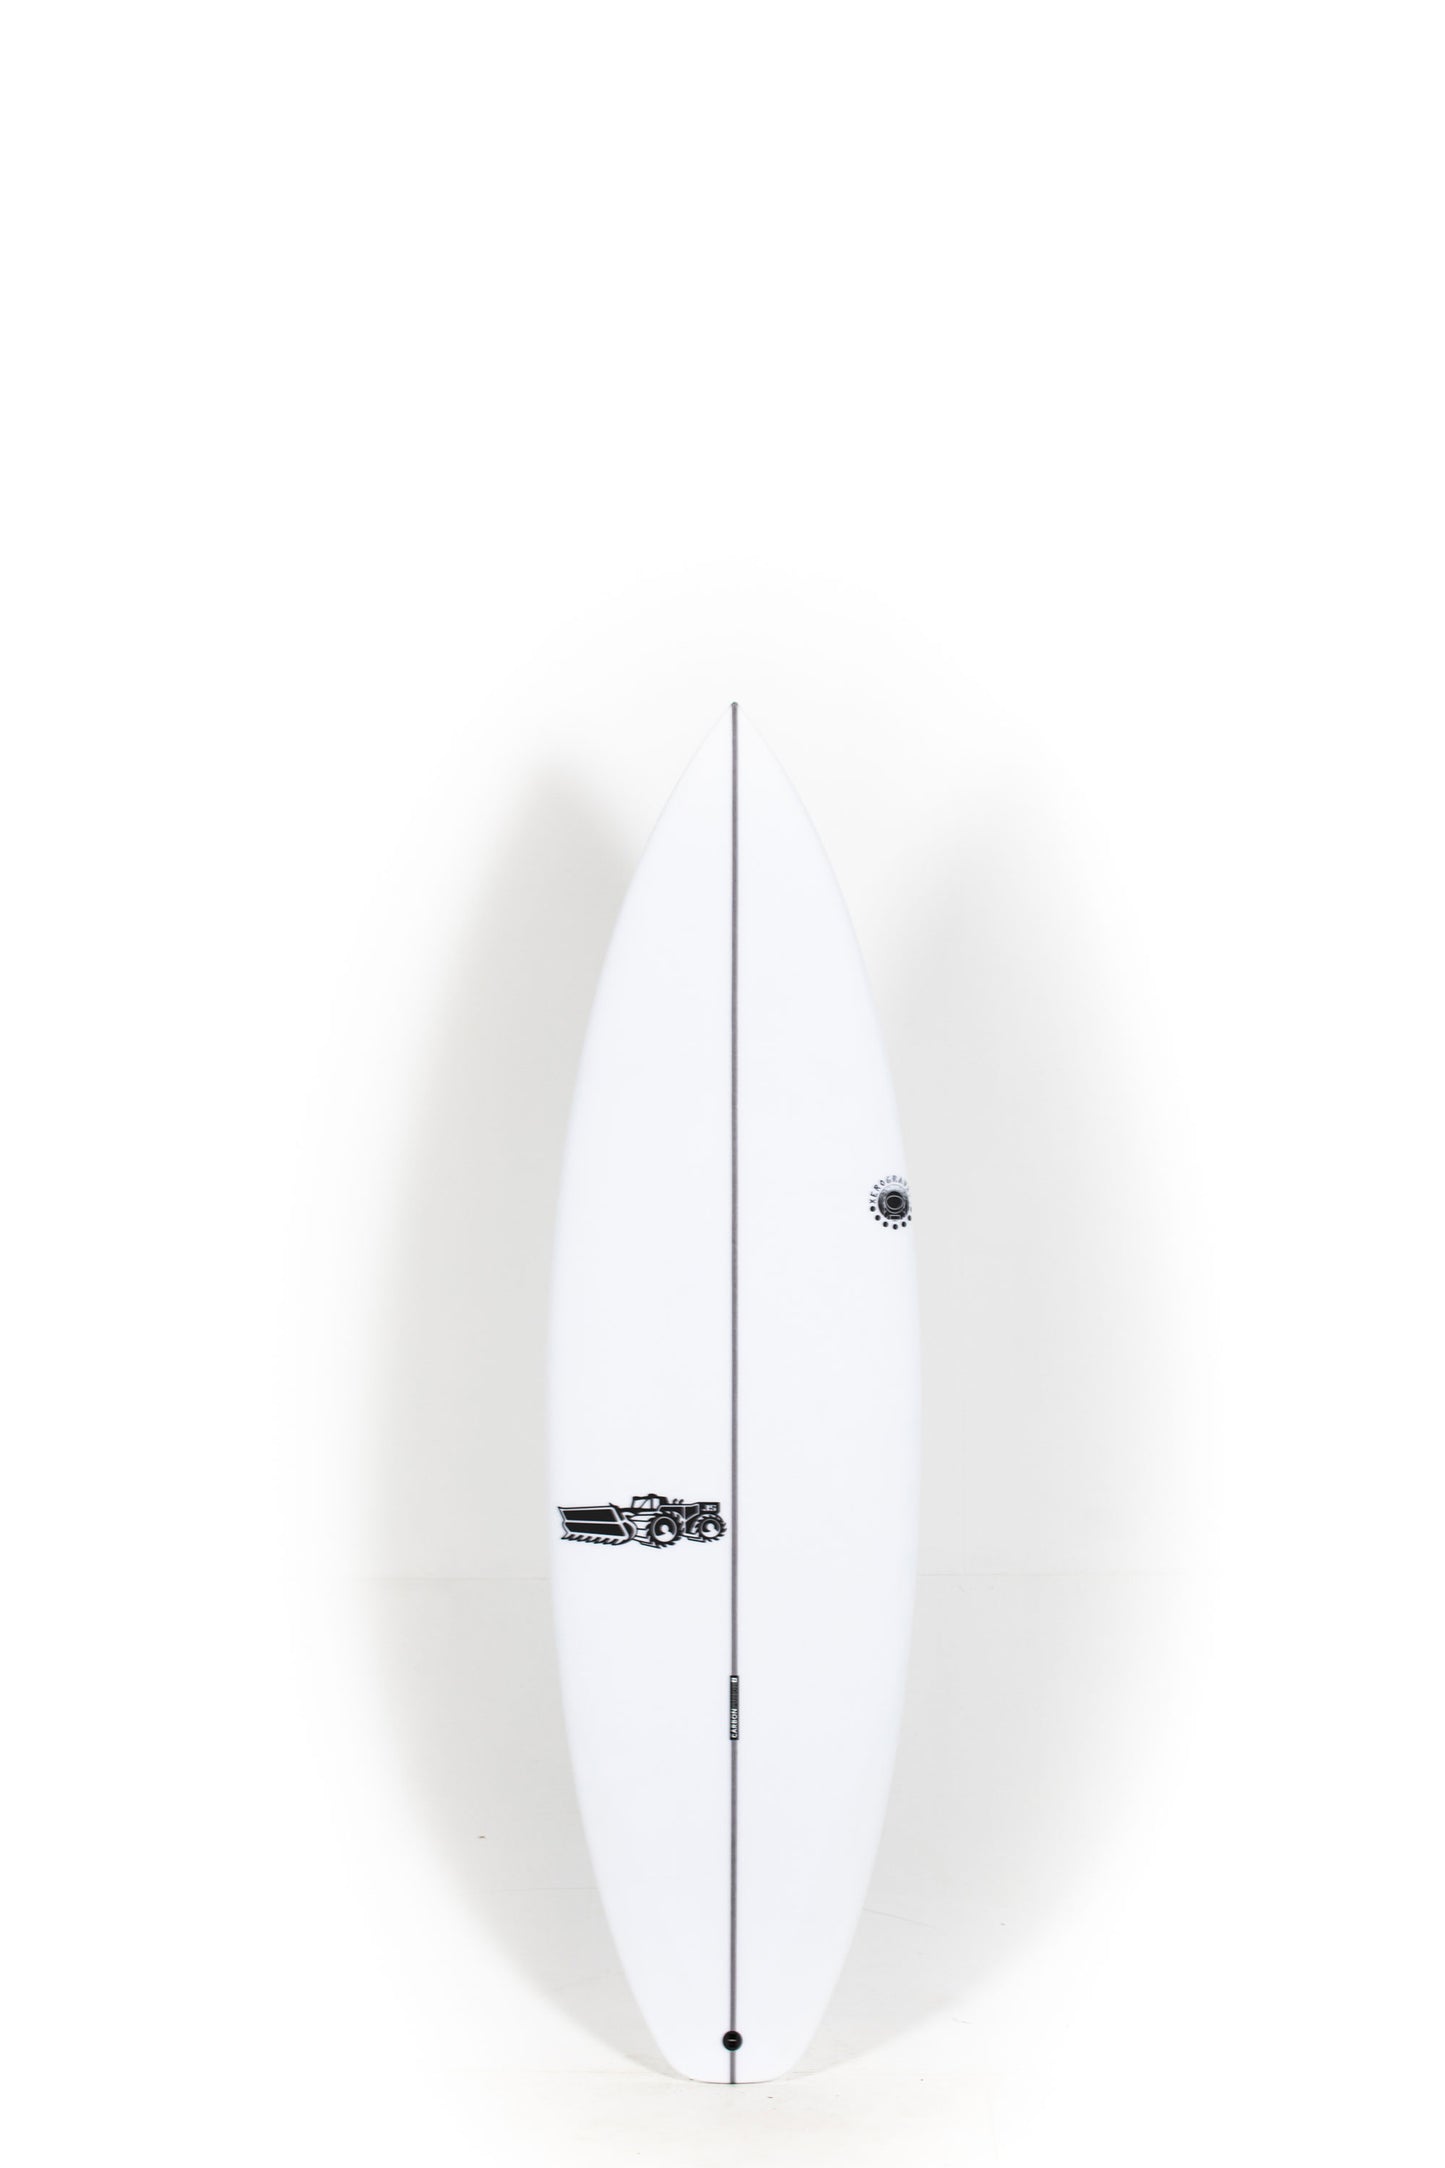 
                  
                    Pukas Surf Shop - JS Surfboards - XERO GRAVITY - 5'11" x 19.50" x 2.44" x 30.2L. - XEROGRAVITY
                  
                